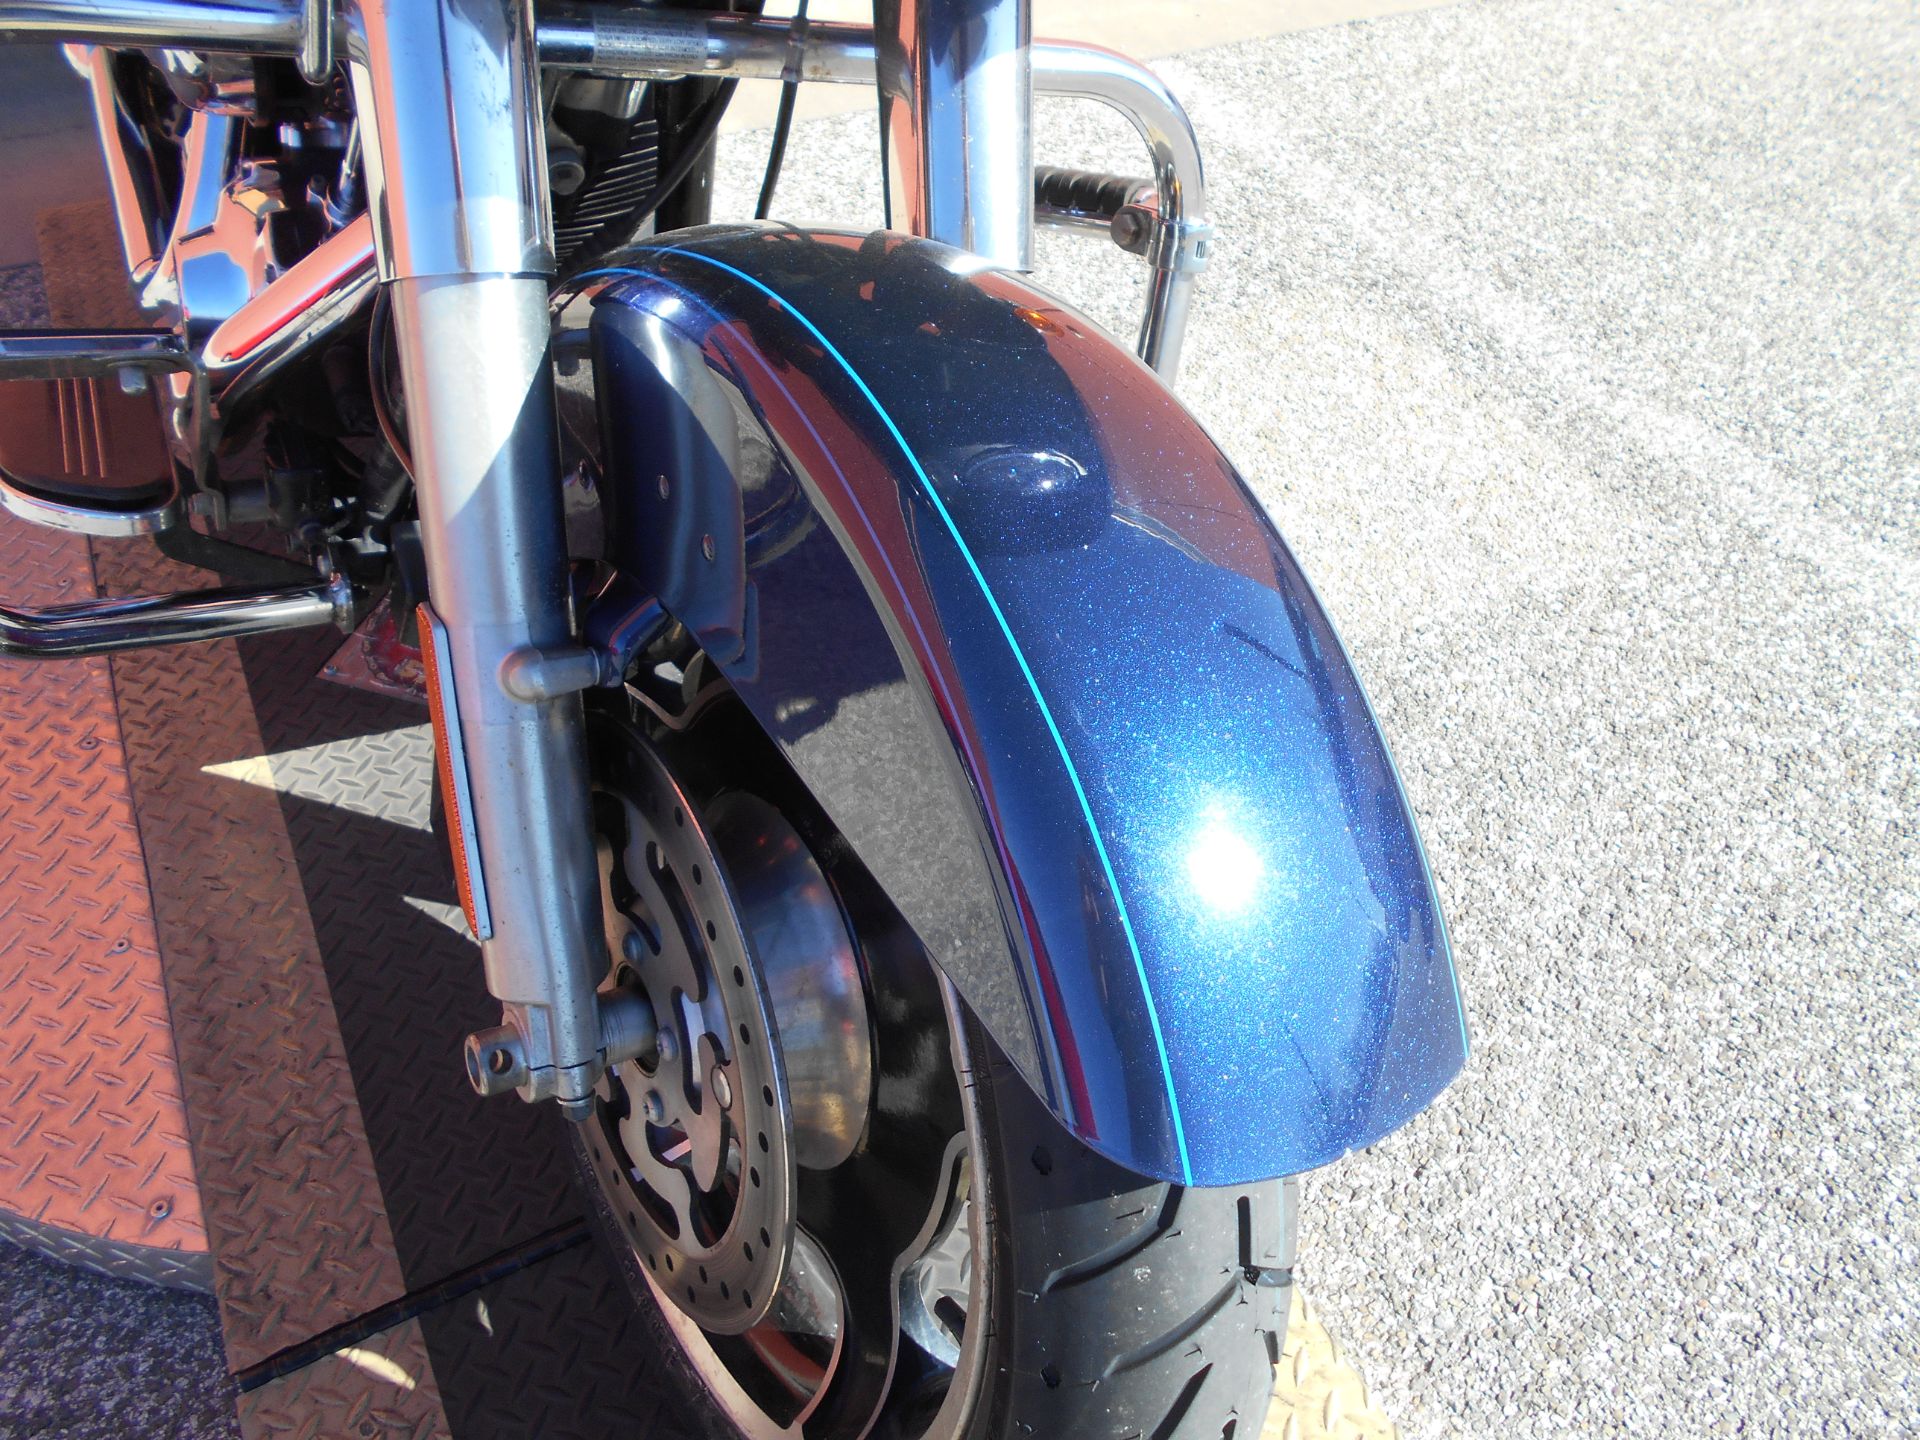 2013 Harley-Davidson Road Glide® Custom in Temple, Texas - Photo 17